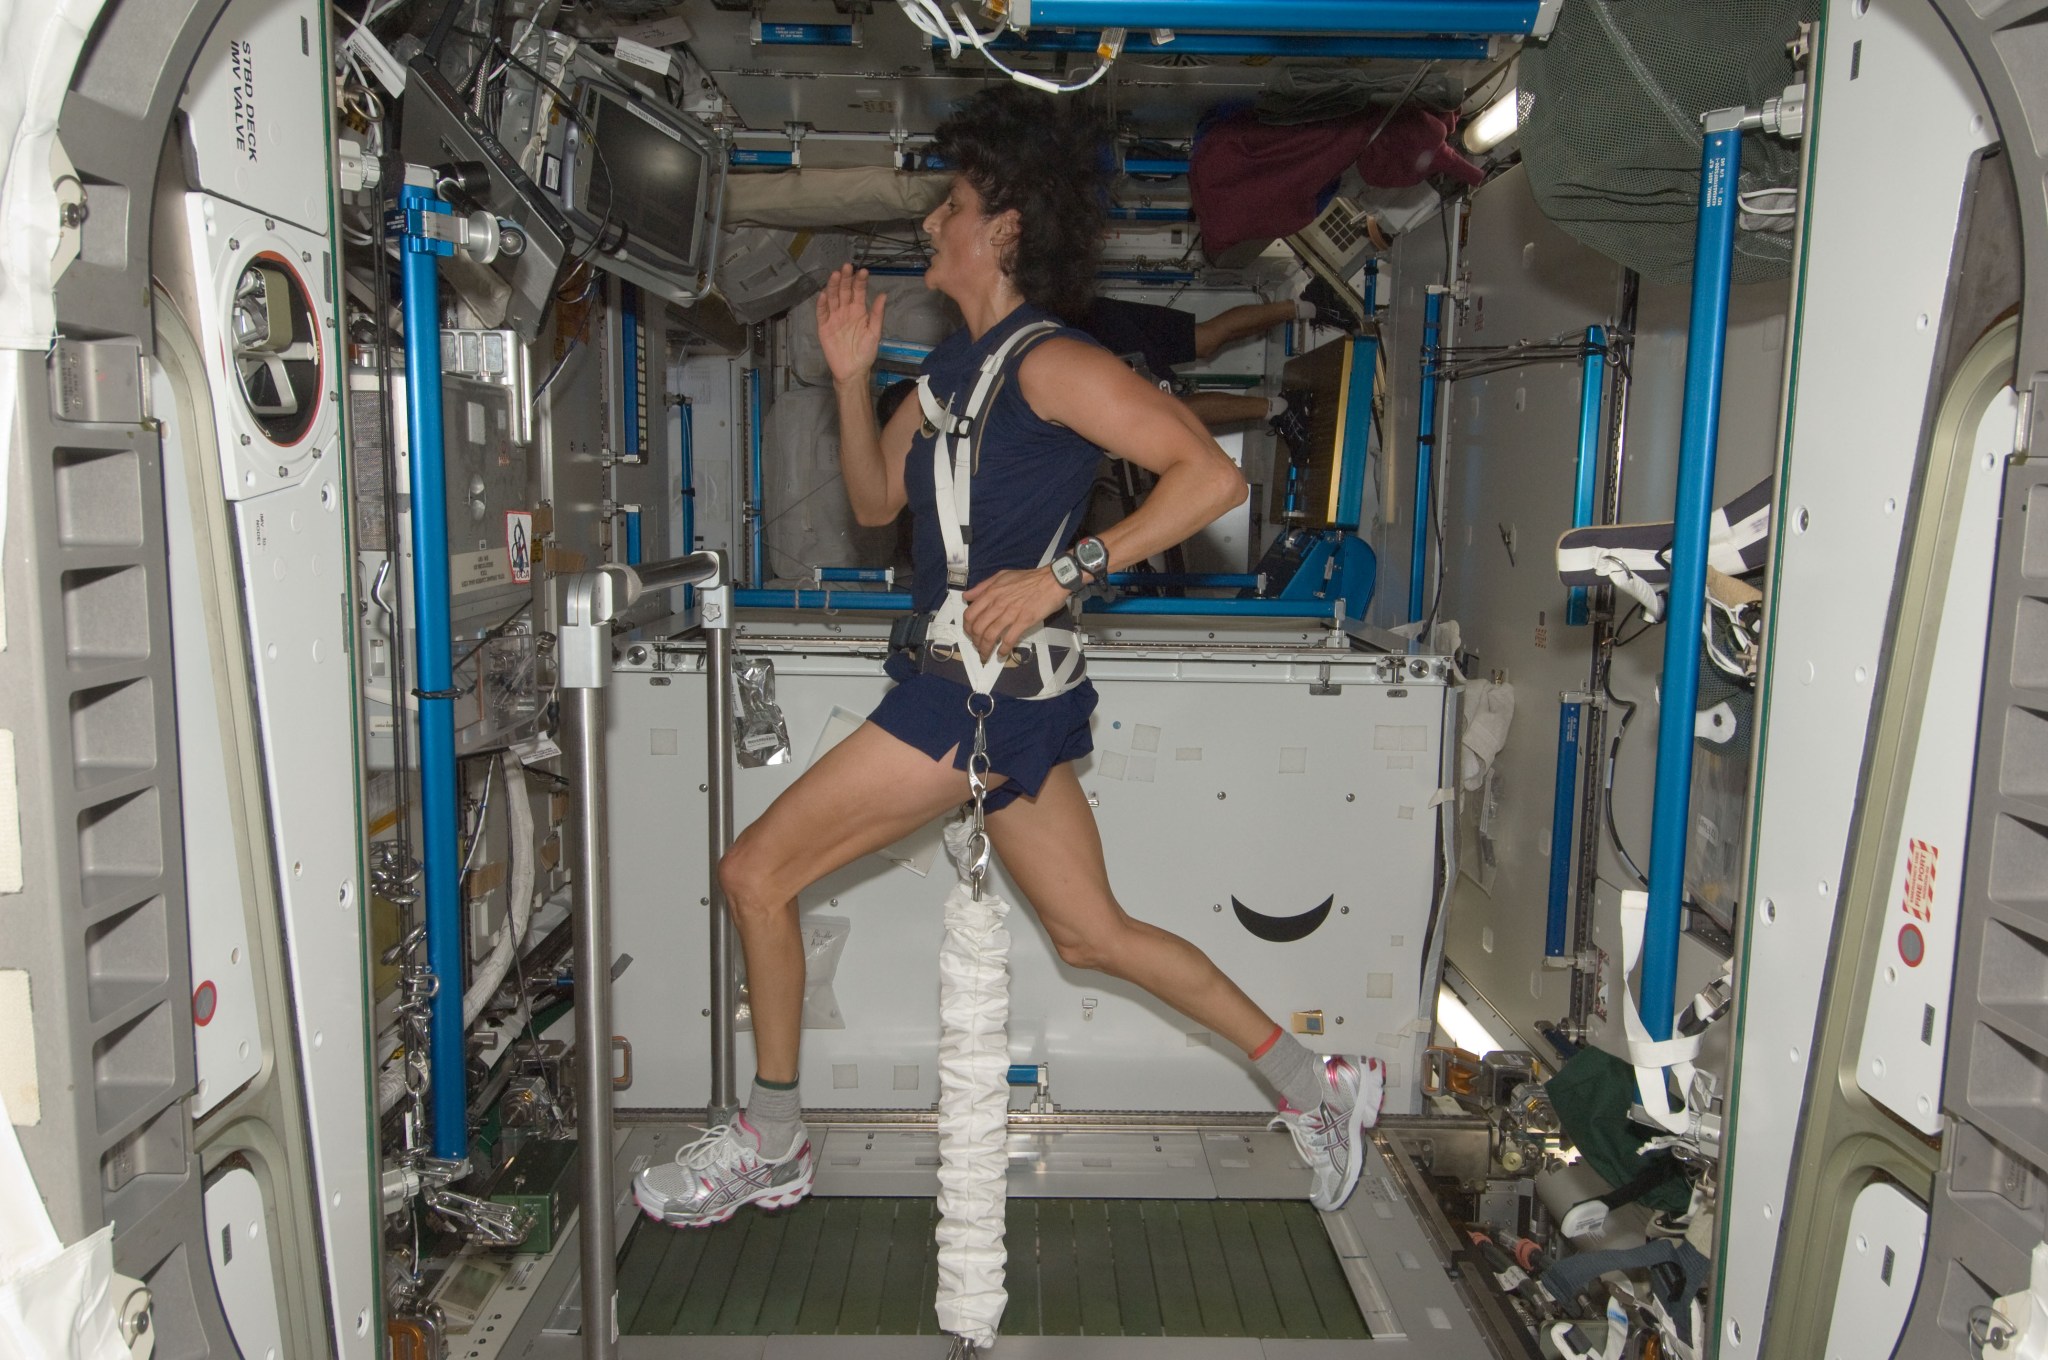 NASA astronaut Sunita Williams exercises